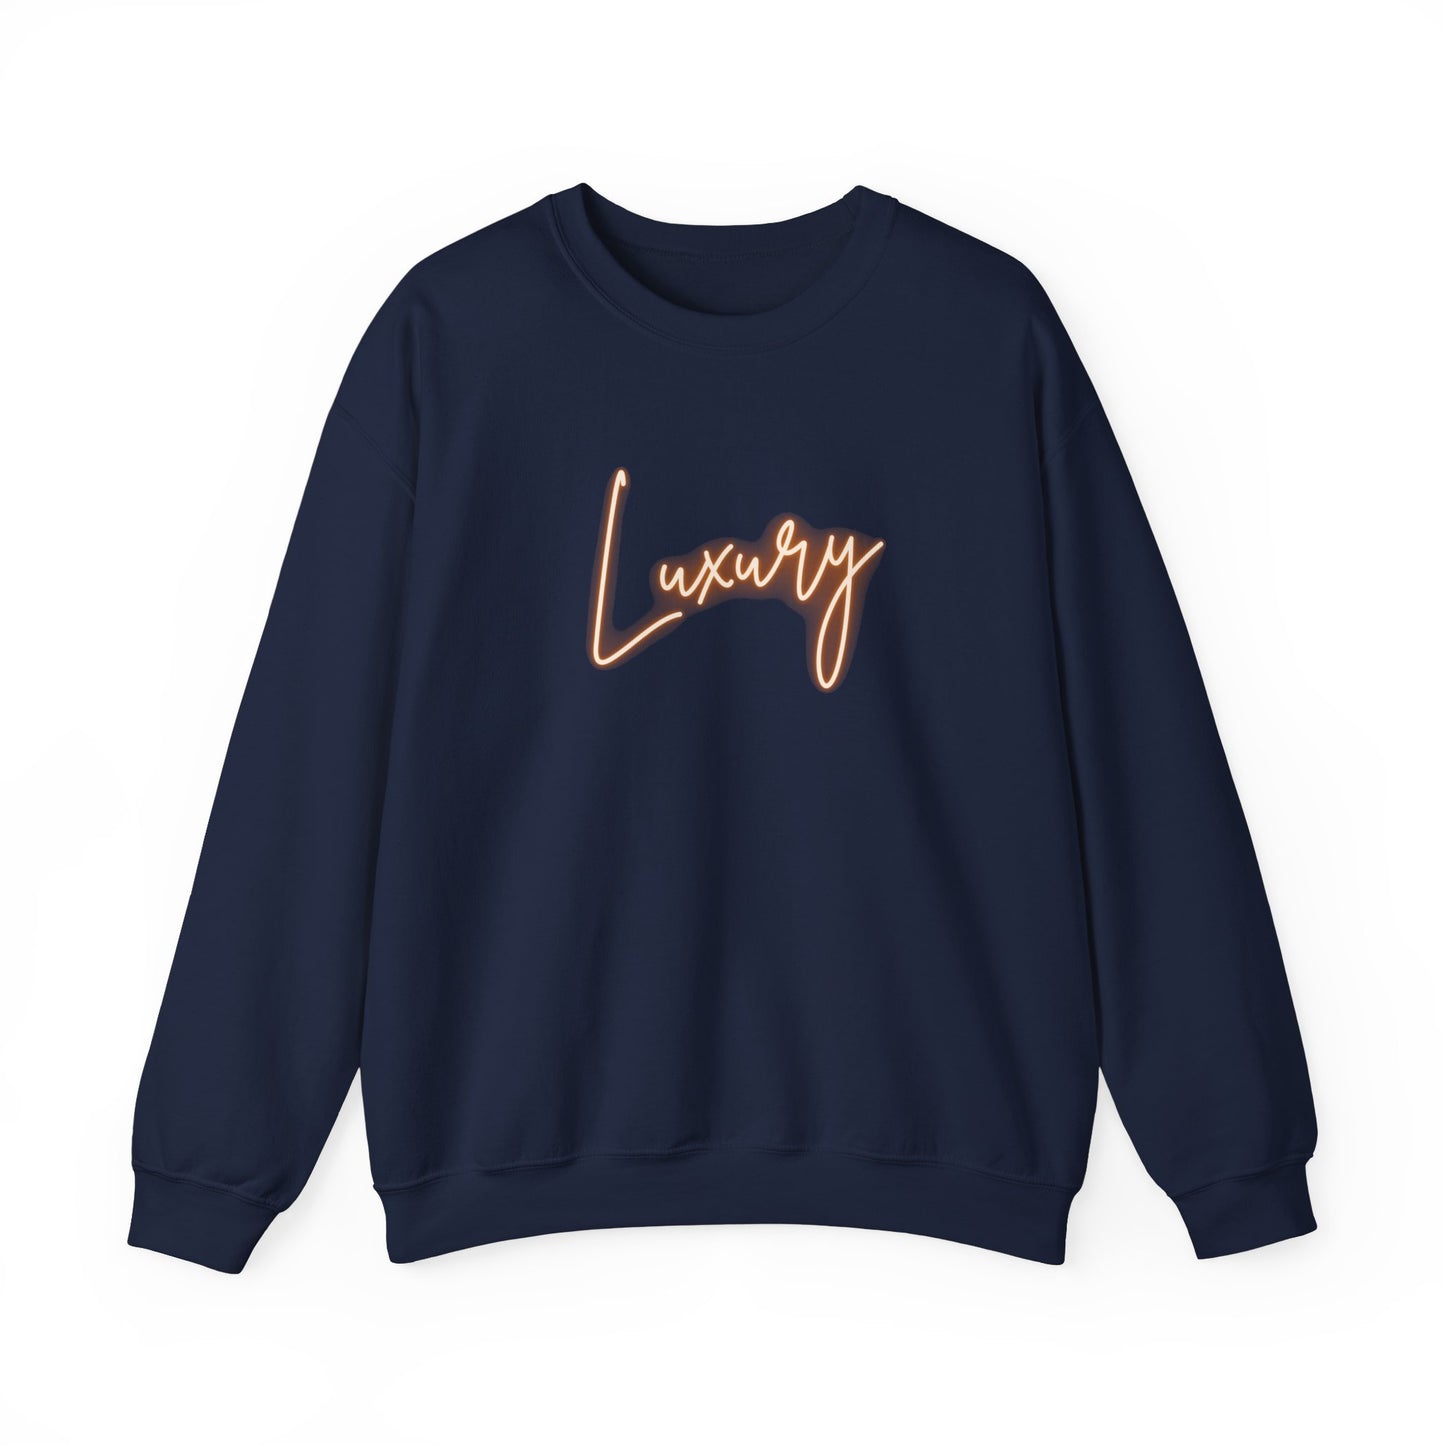 The Luxury Tangerine Neon Light Sweatshirt